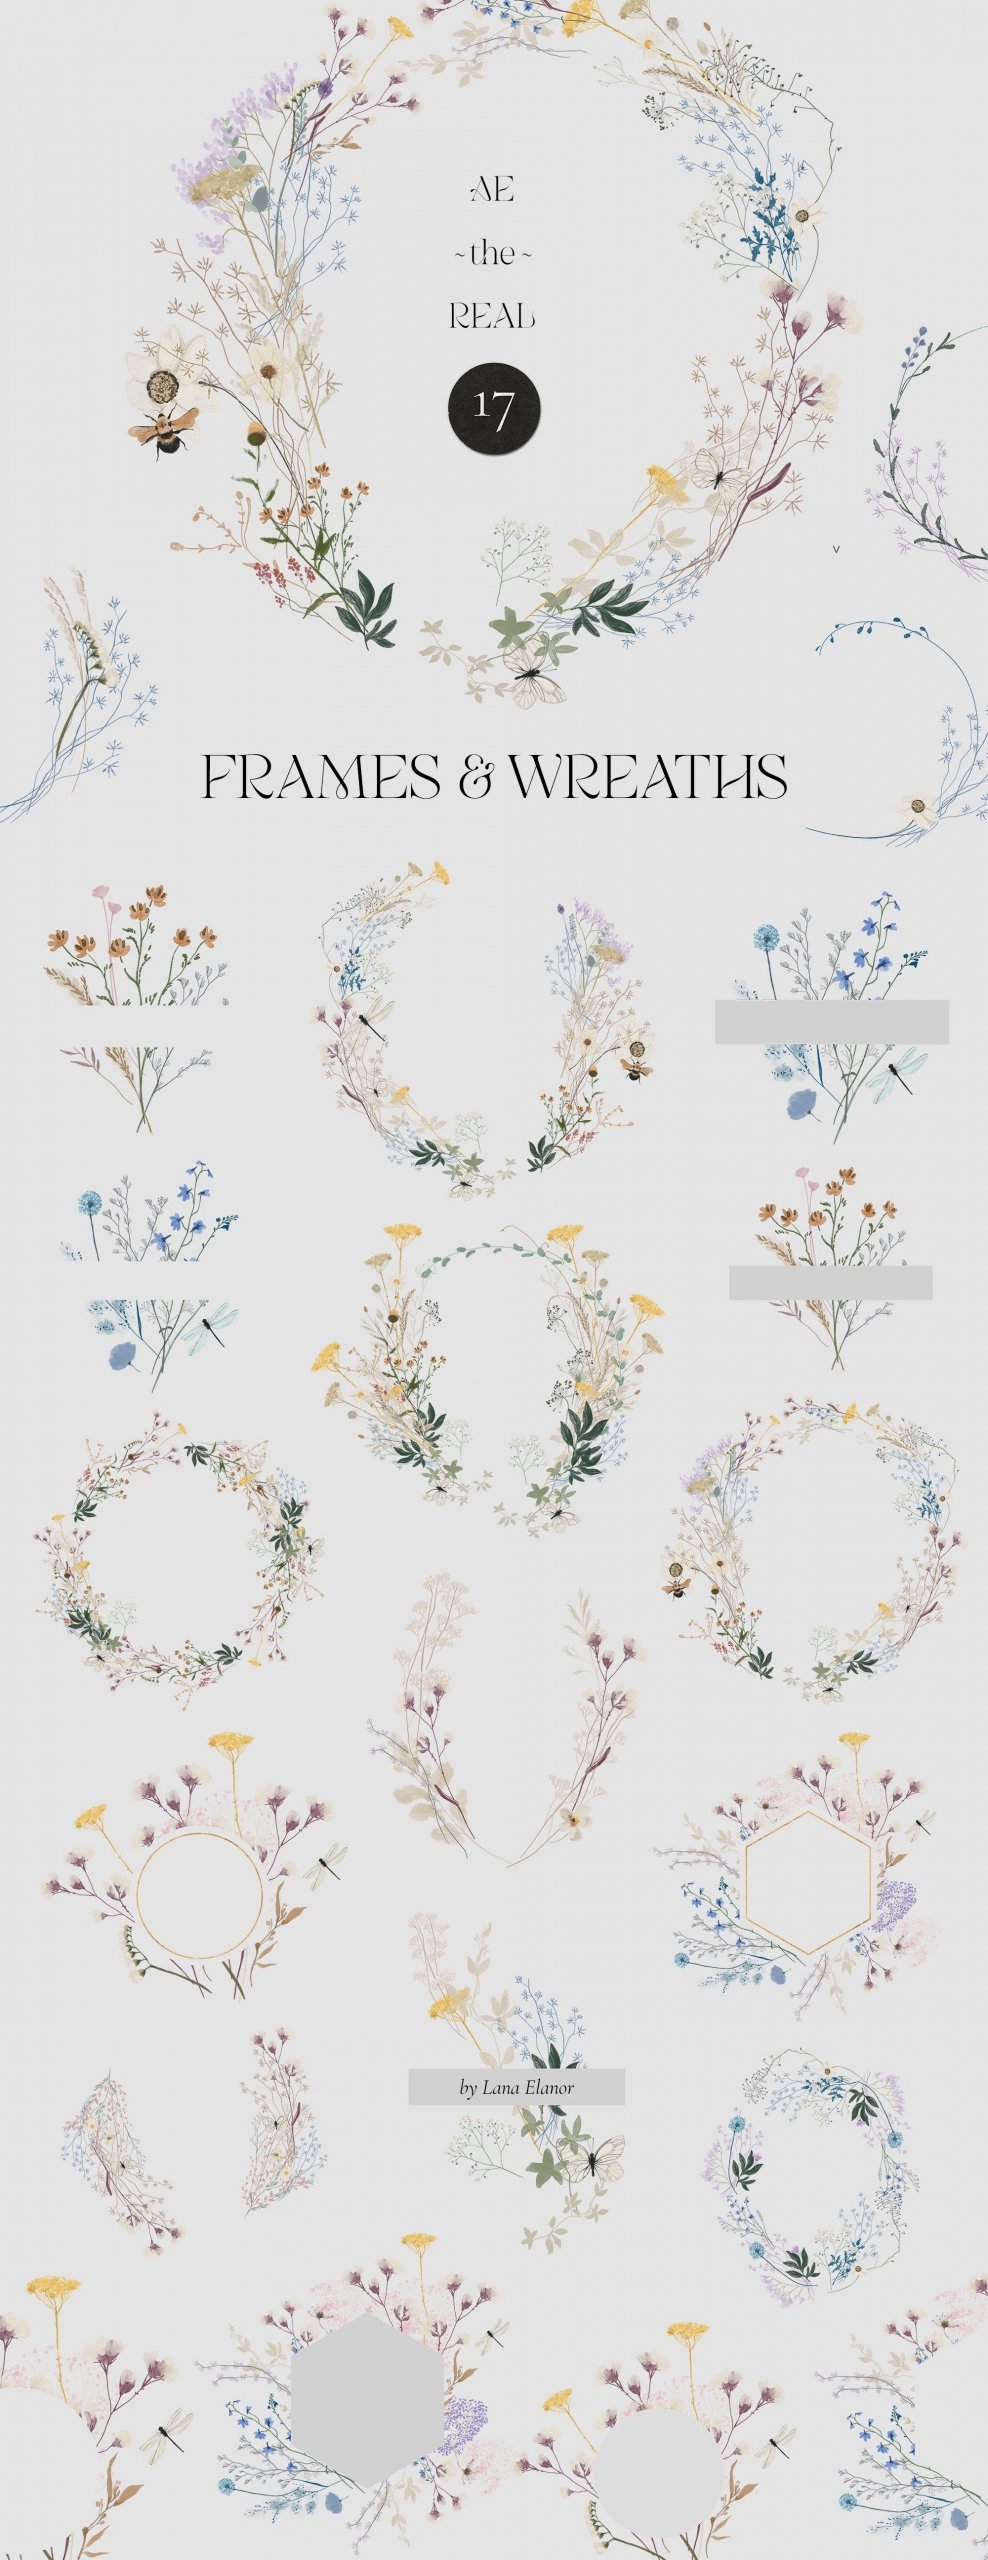 Aethereal Fragile Wild Flowers Art